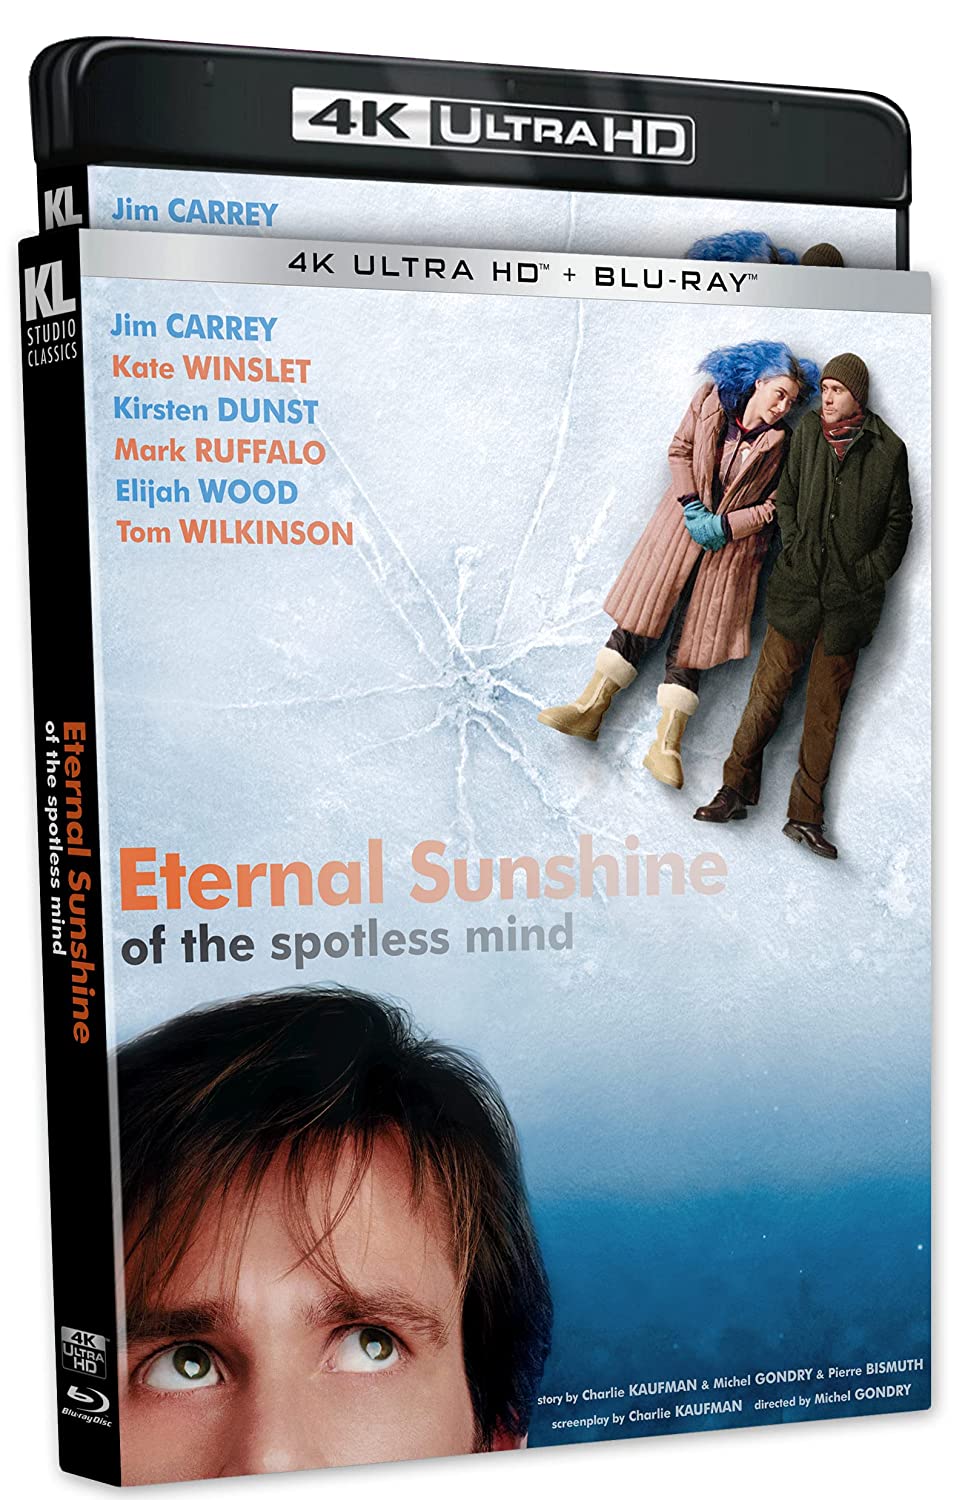 Eternal Sunshine of the Spotless Mind 4k Blu-ray